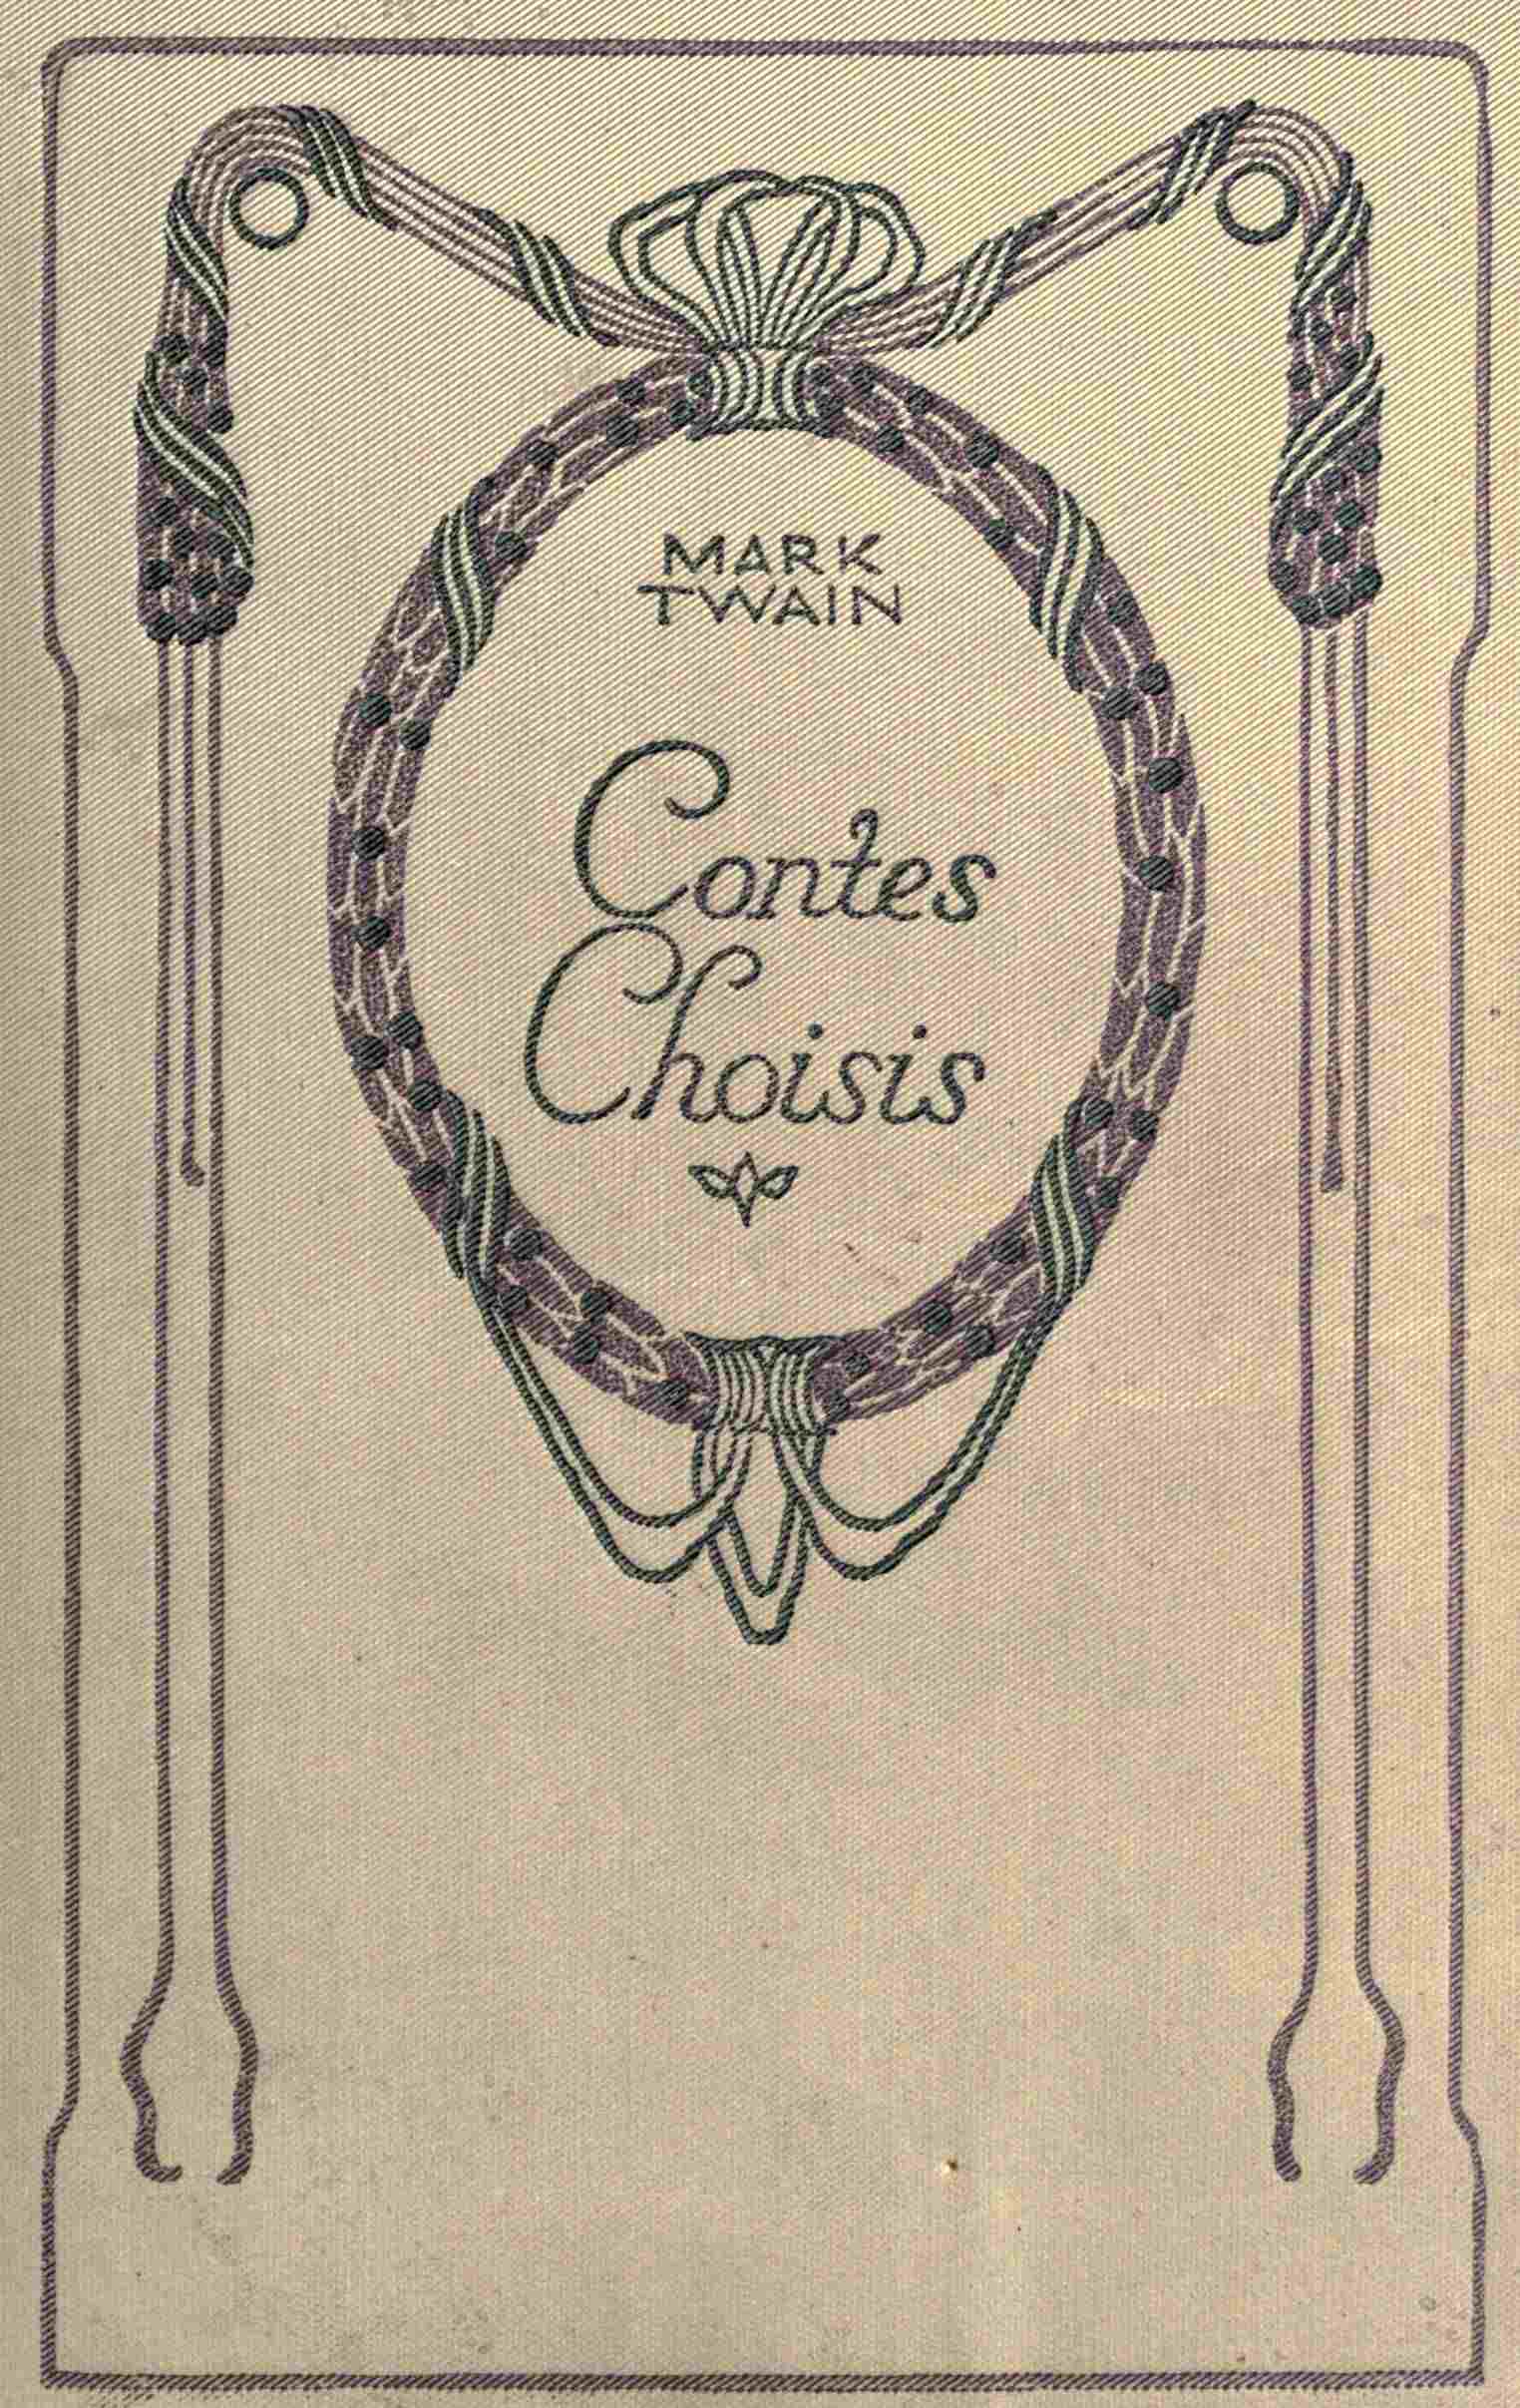 The Project Gutenberg eBook of Contes choisis, par Mark Twain.